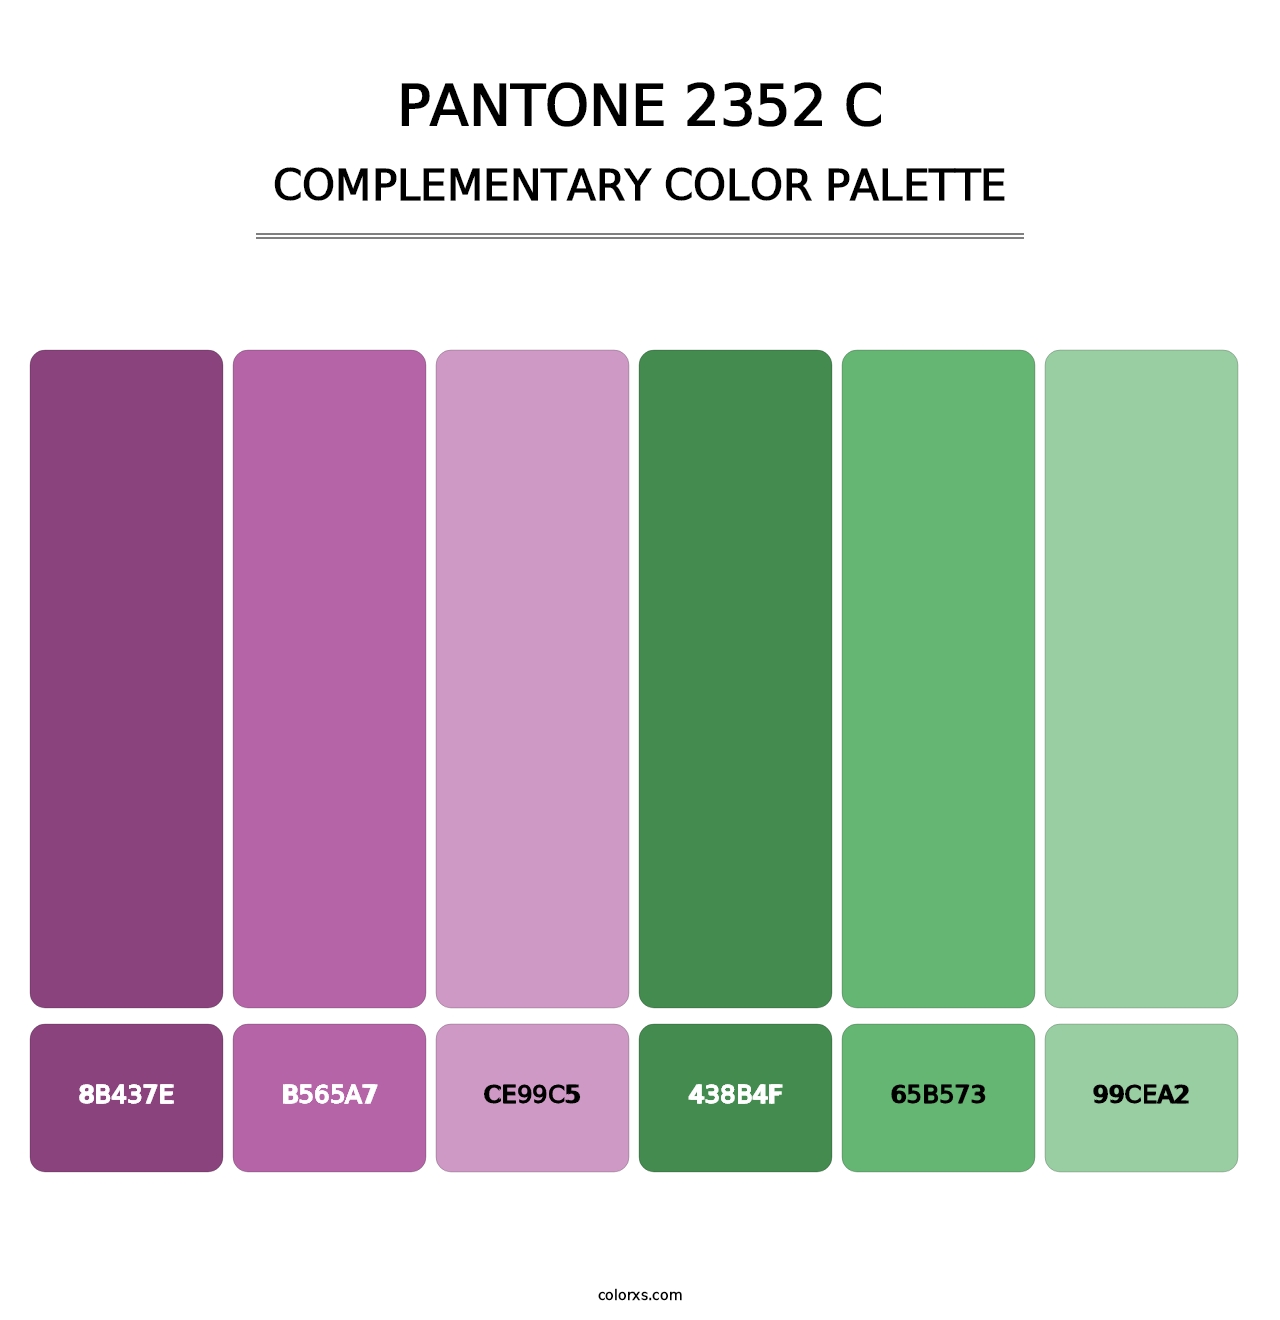 PANTONE 2352 C - Complementary Color Palette